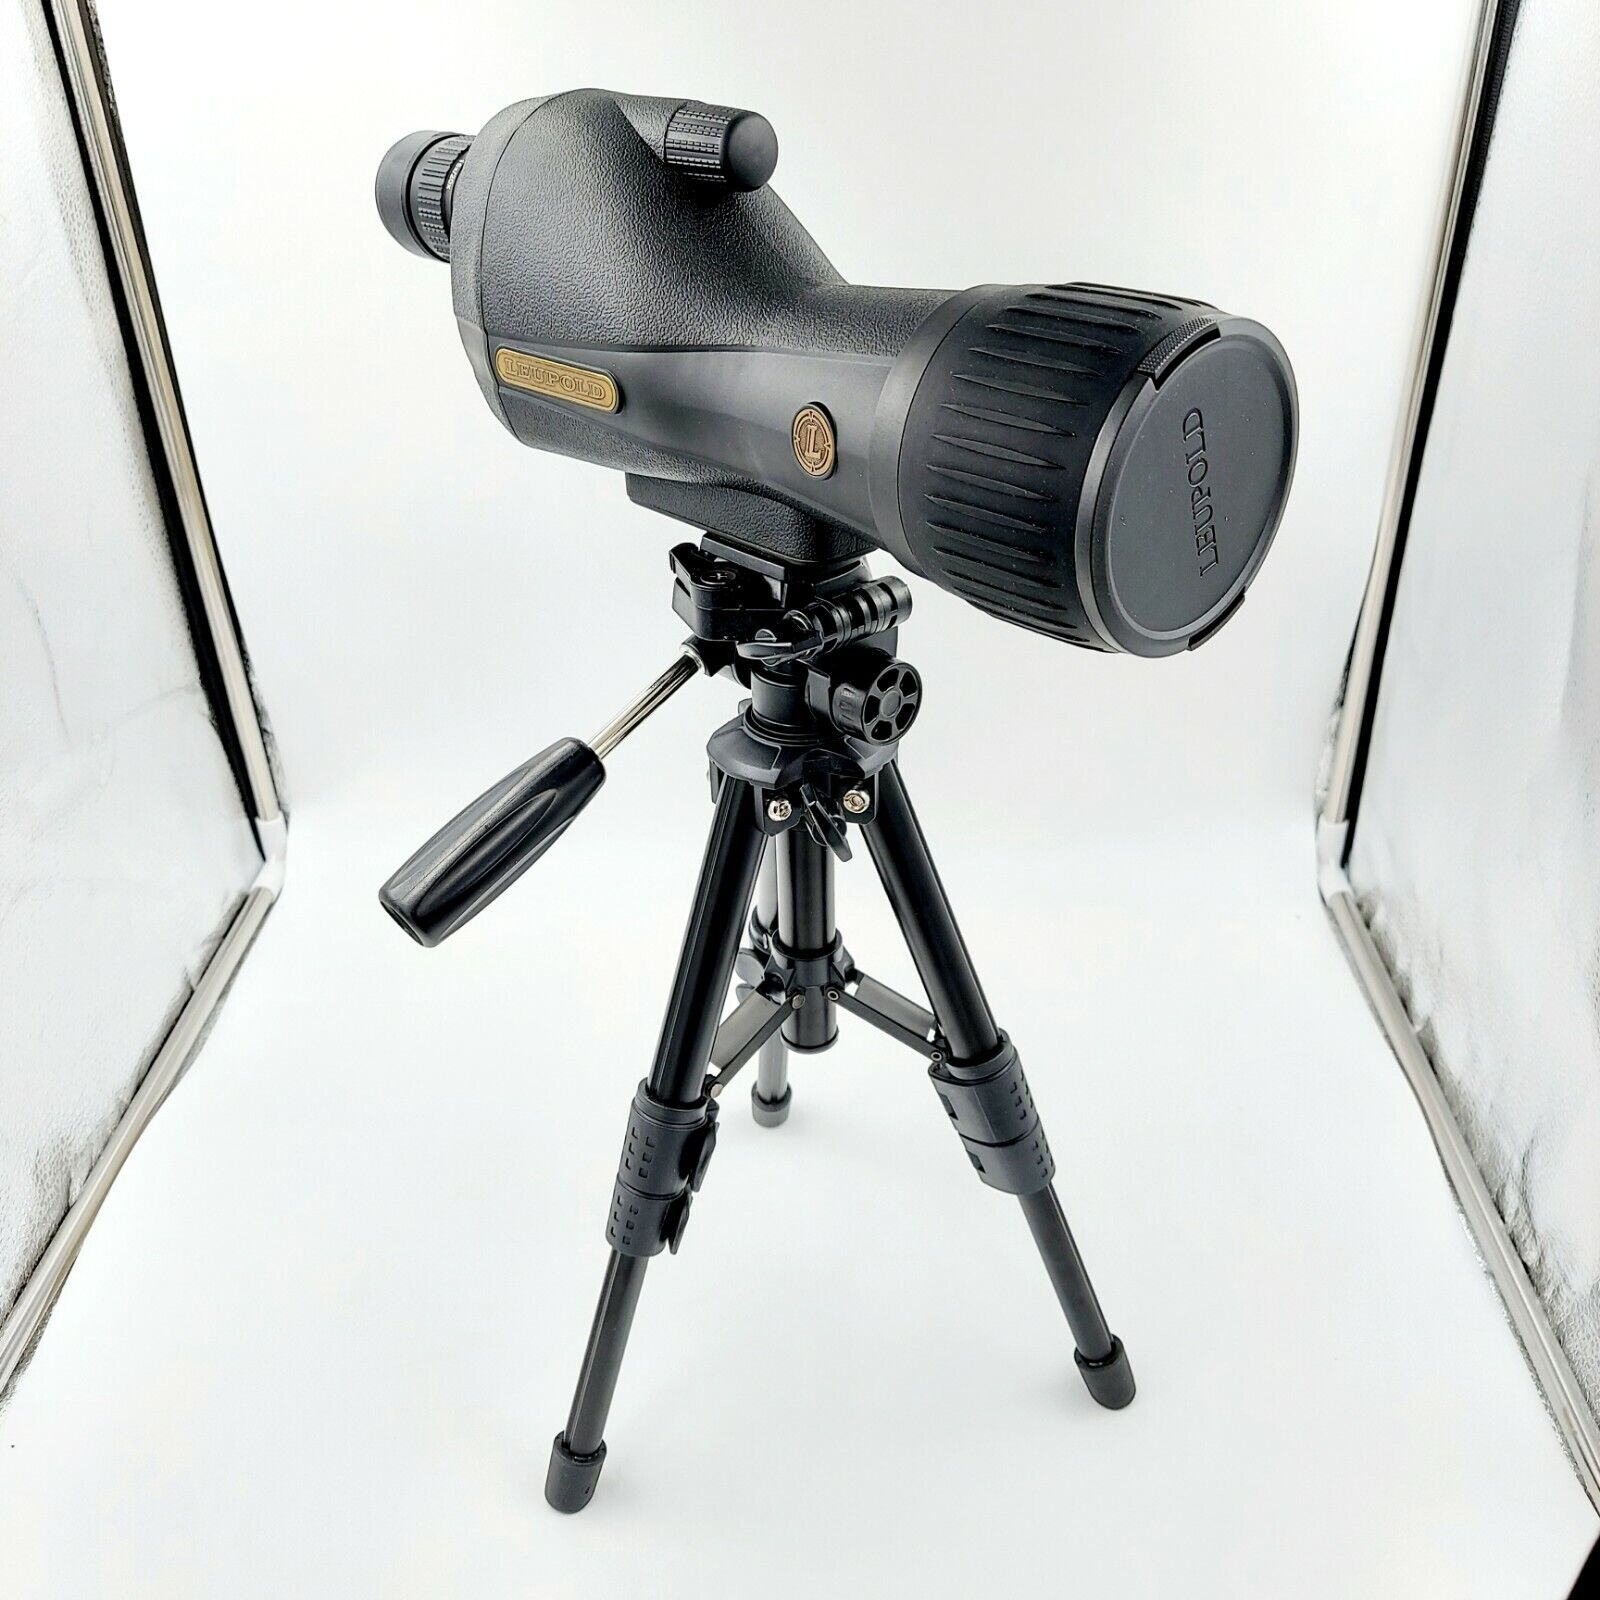 NEVER USED - Leupold SX-1 Ventana 15-45x60mm Spotting Scope Kit